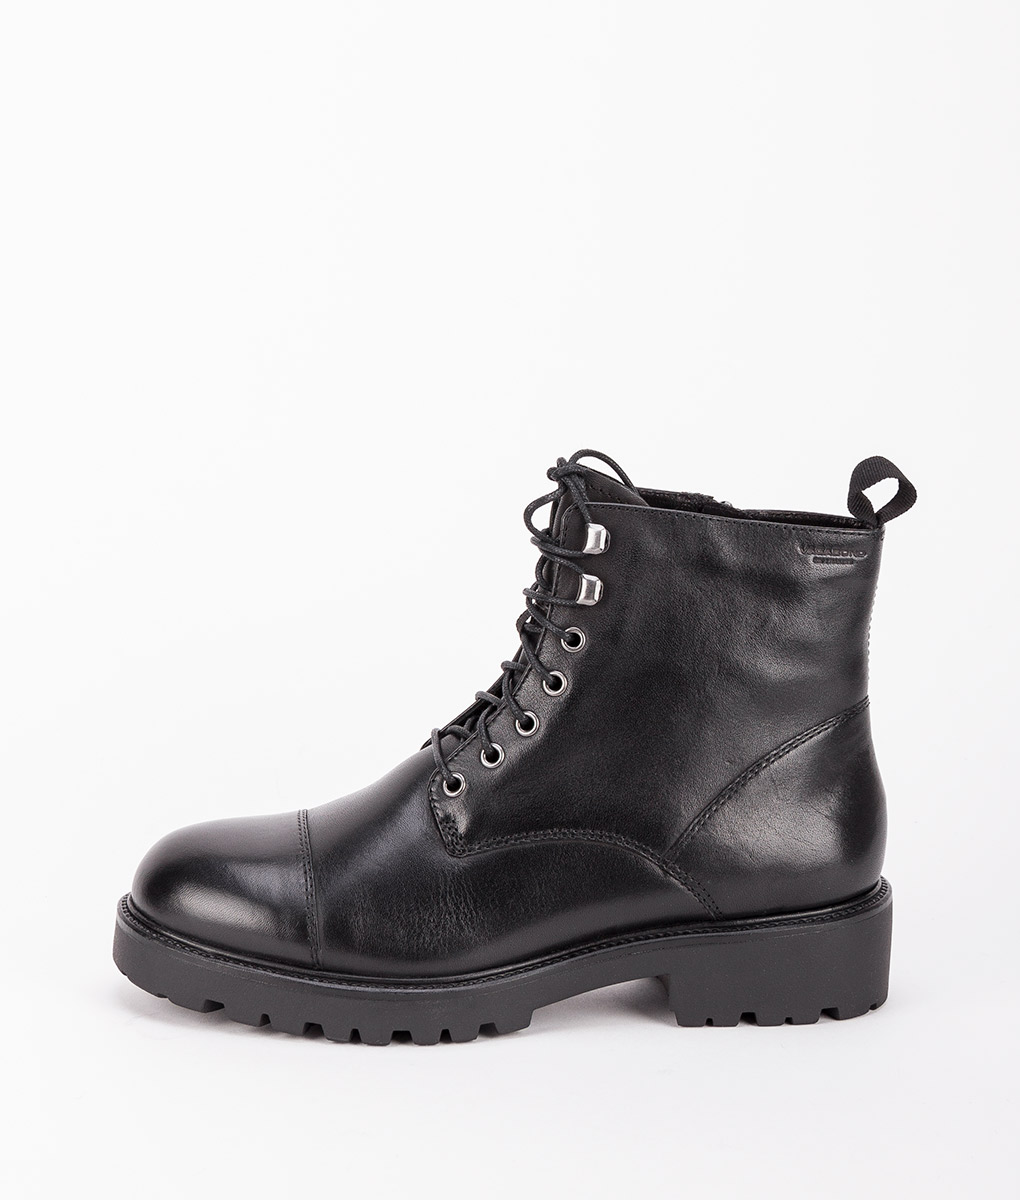 VAGABOND Women Ankle Boots 4457201 KENOVA, Black 129.99 | T6/8